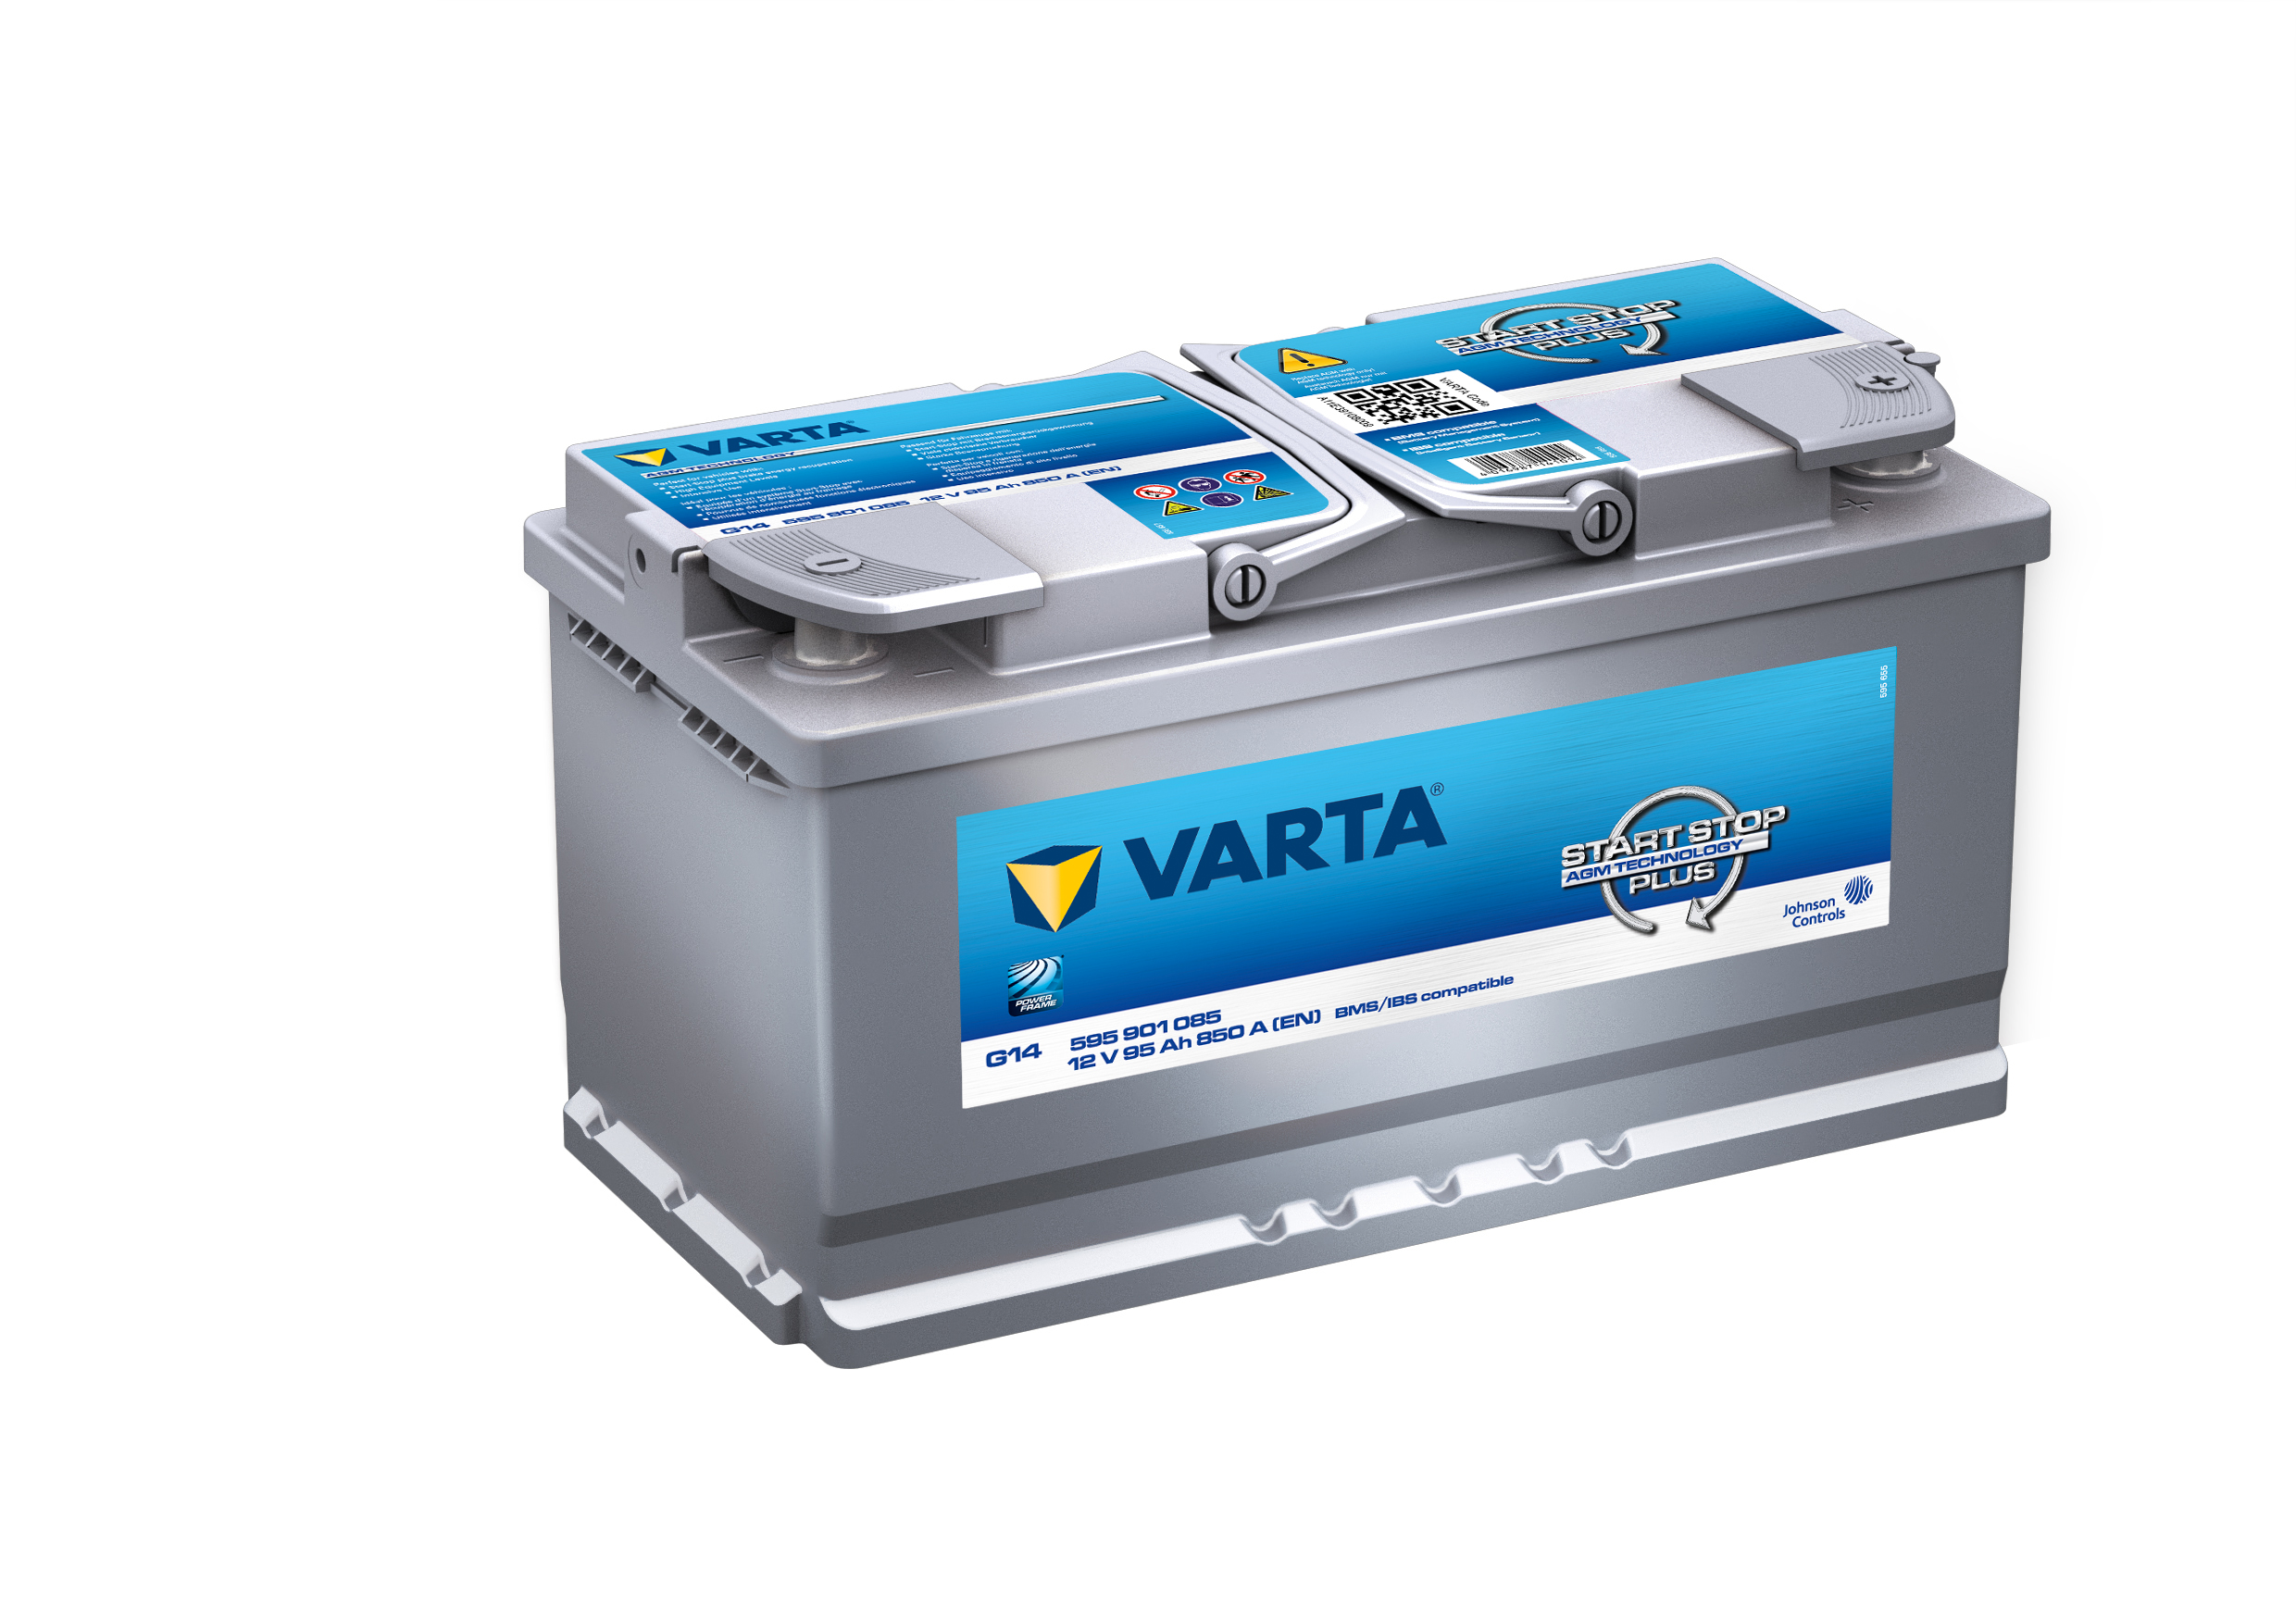 Varta Start-Stop Plus AGM batteri G14 12 V 95 Ah CCA 850 A (EN